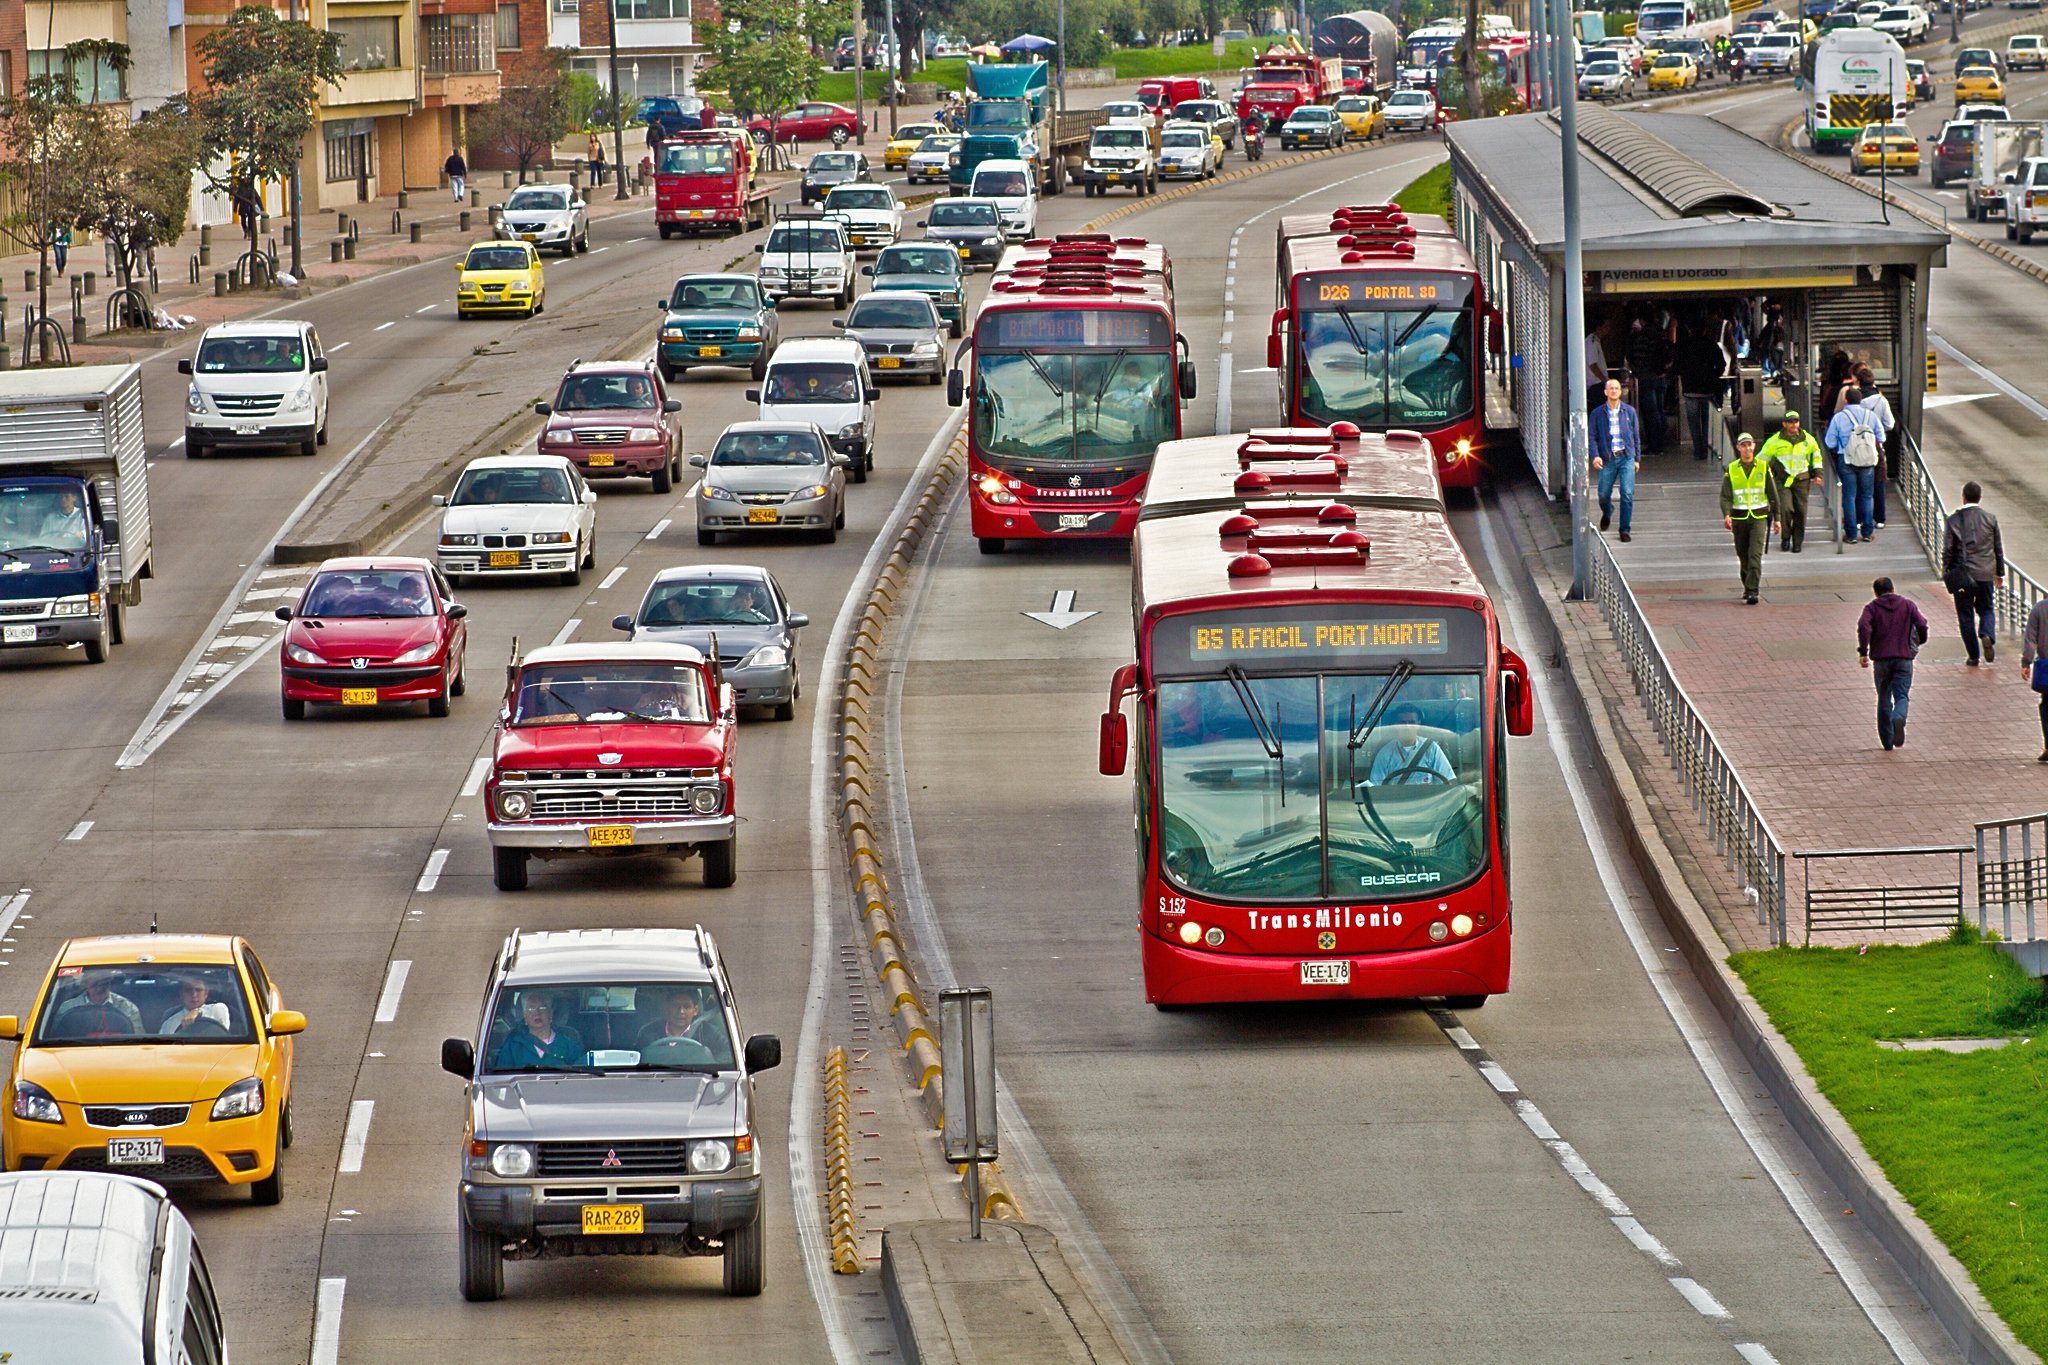 TransMilenio buses, part of Bogotá’s bus rapid transit system, travel down lanes separated from regular motorised traffic.